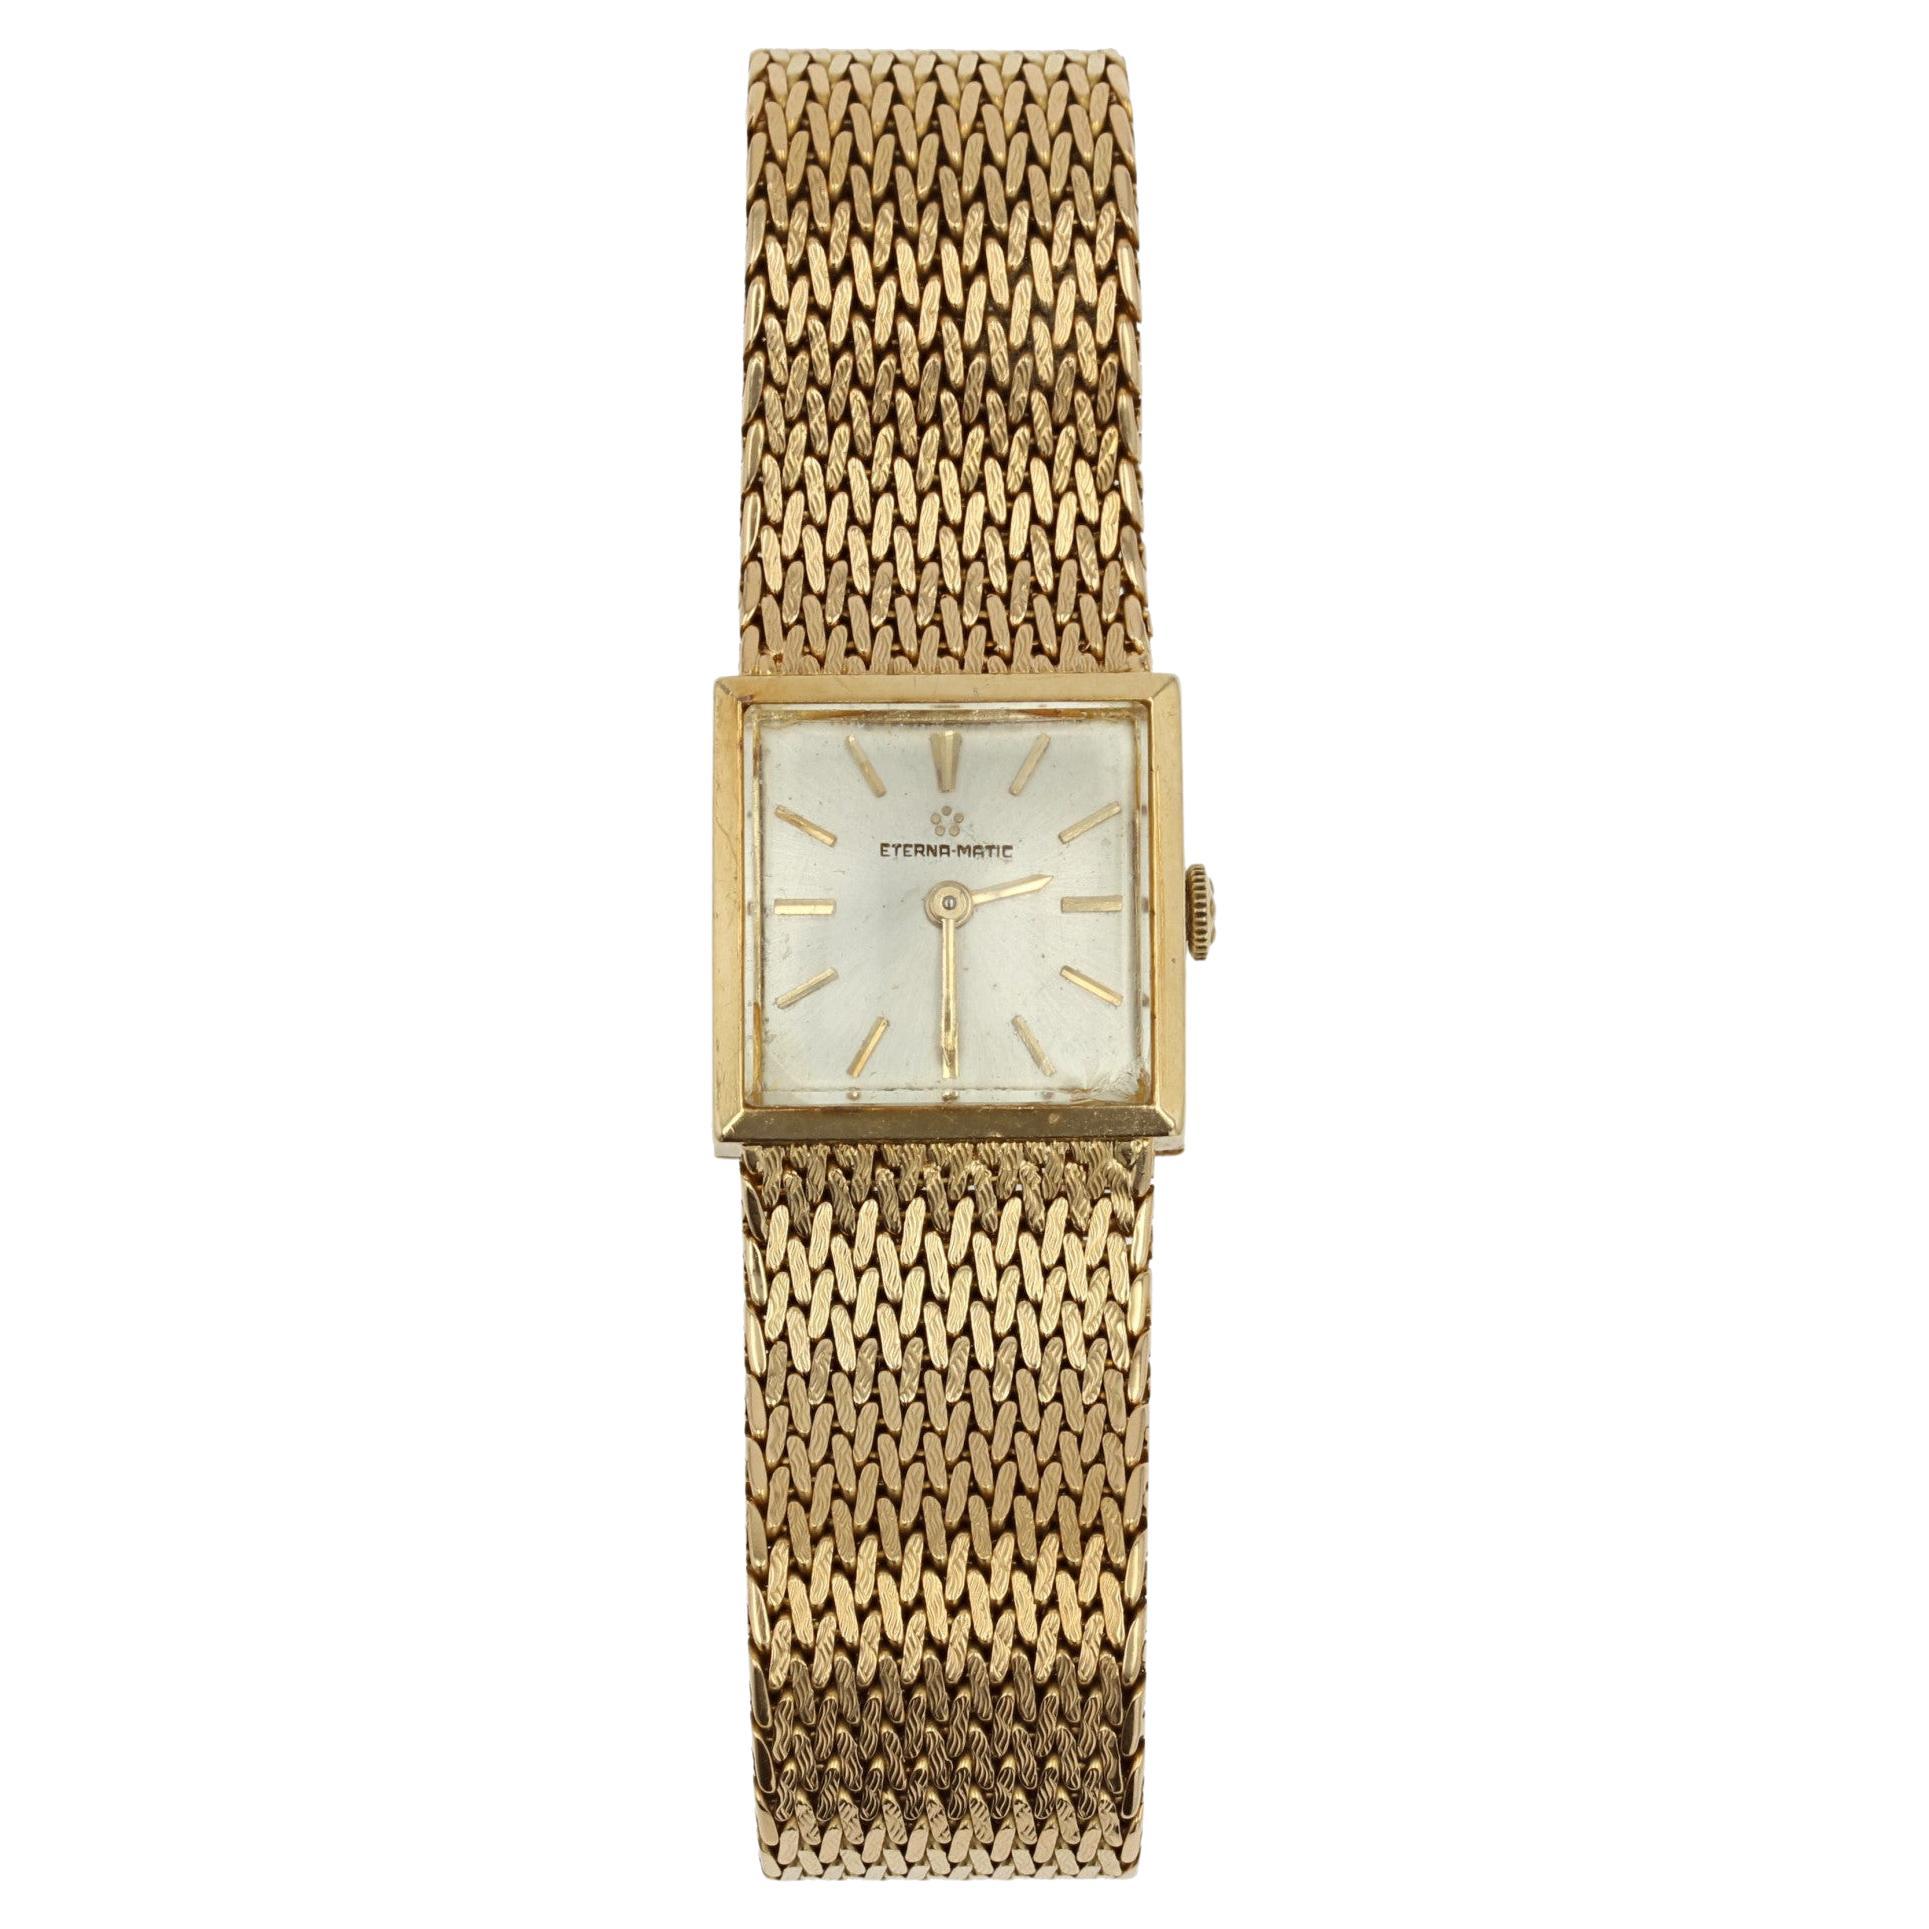 1960s 18 Karat Yellow Gold Eterna Matic Ladys' Watch